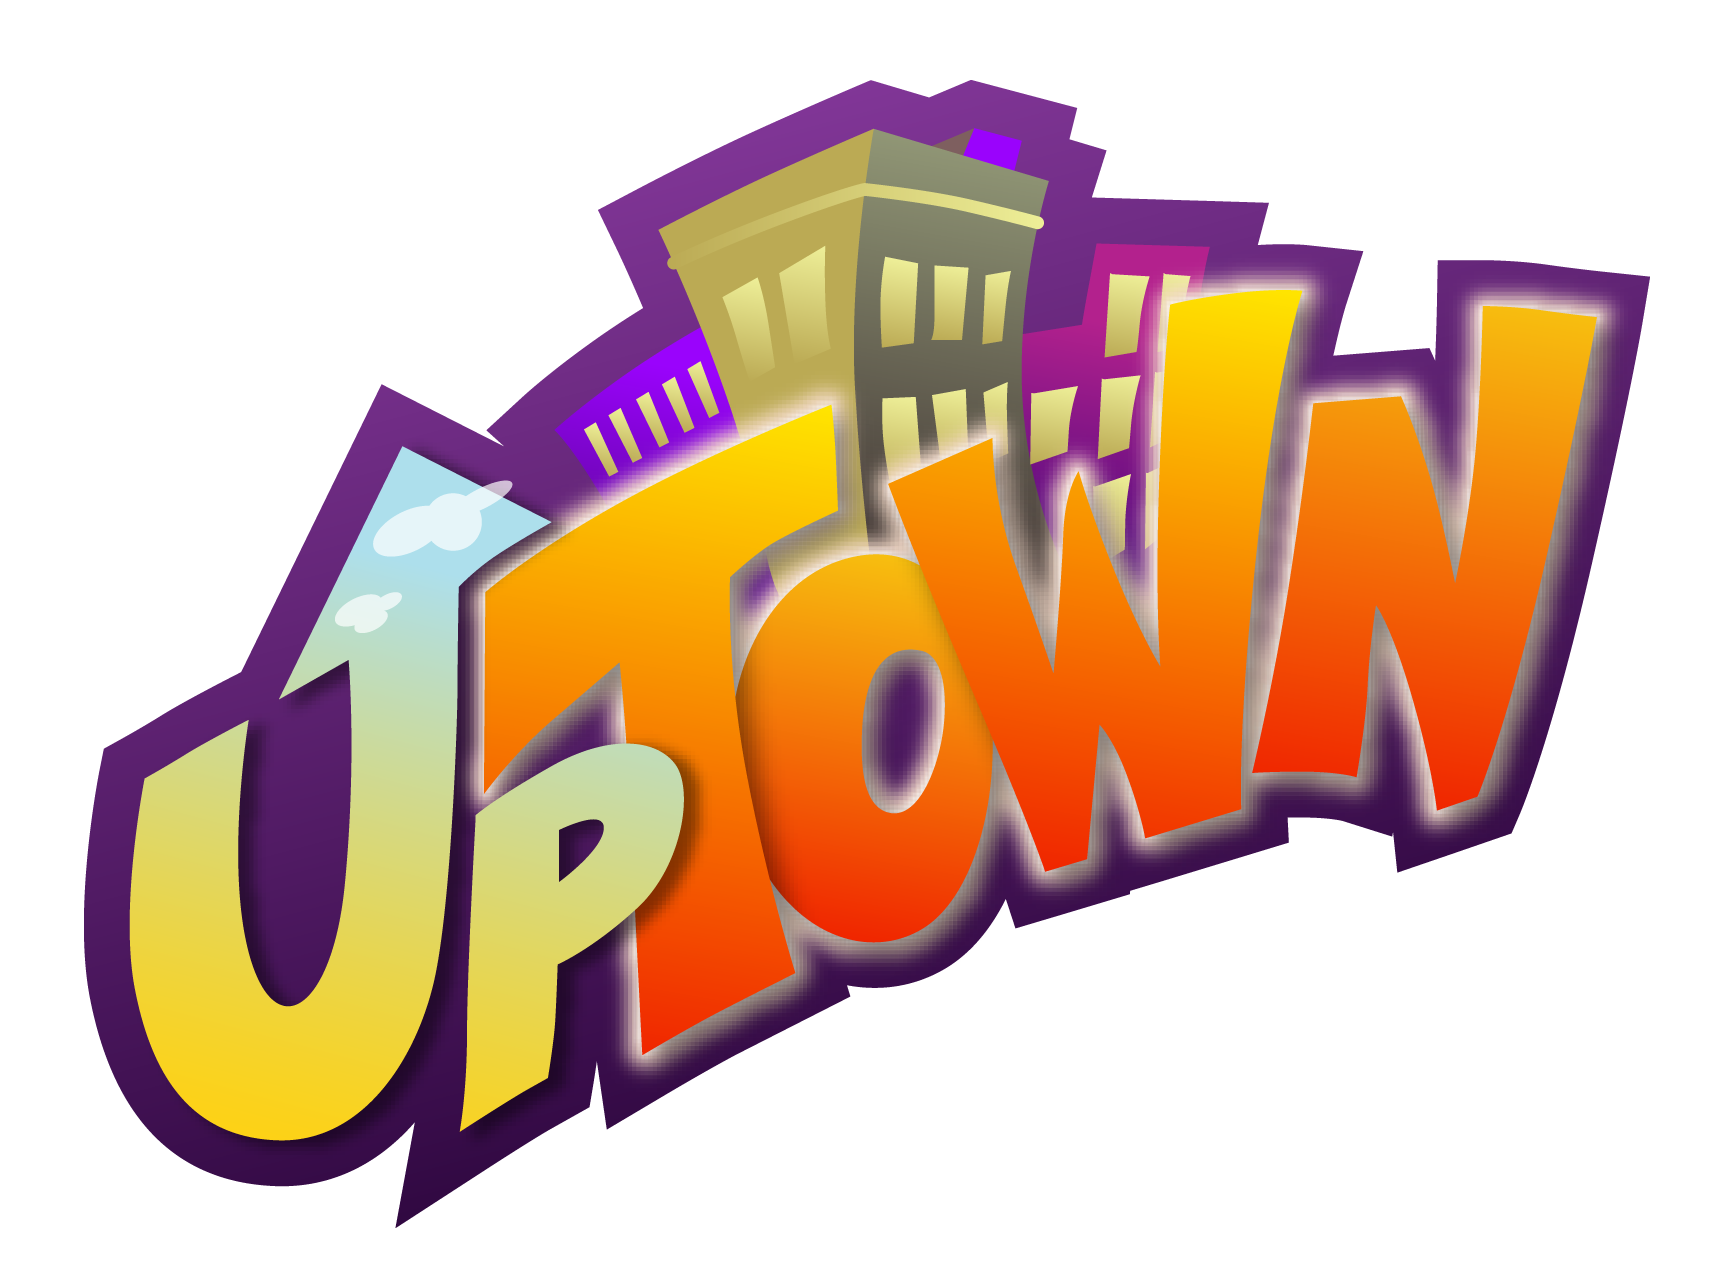 uptown download